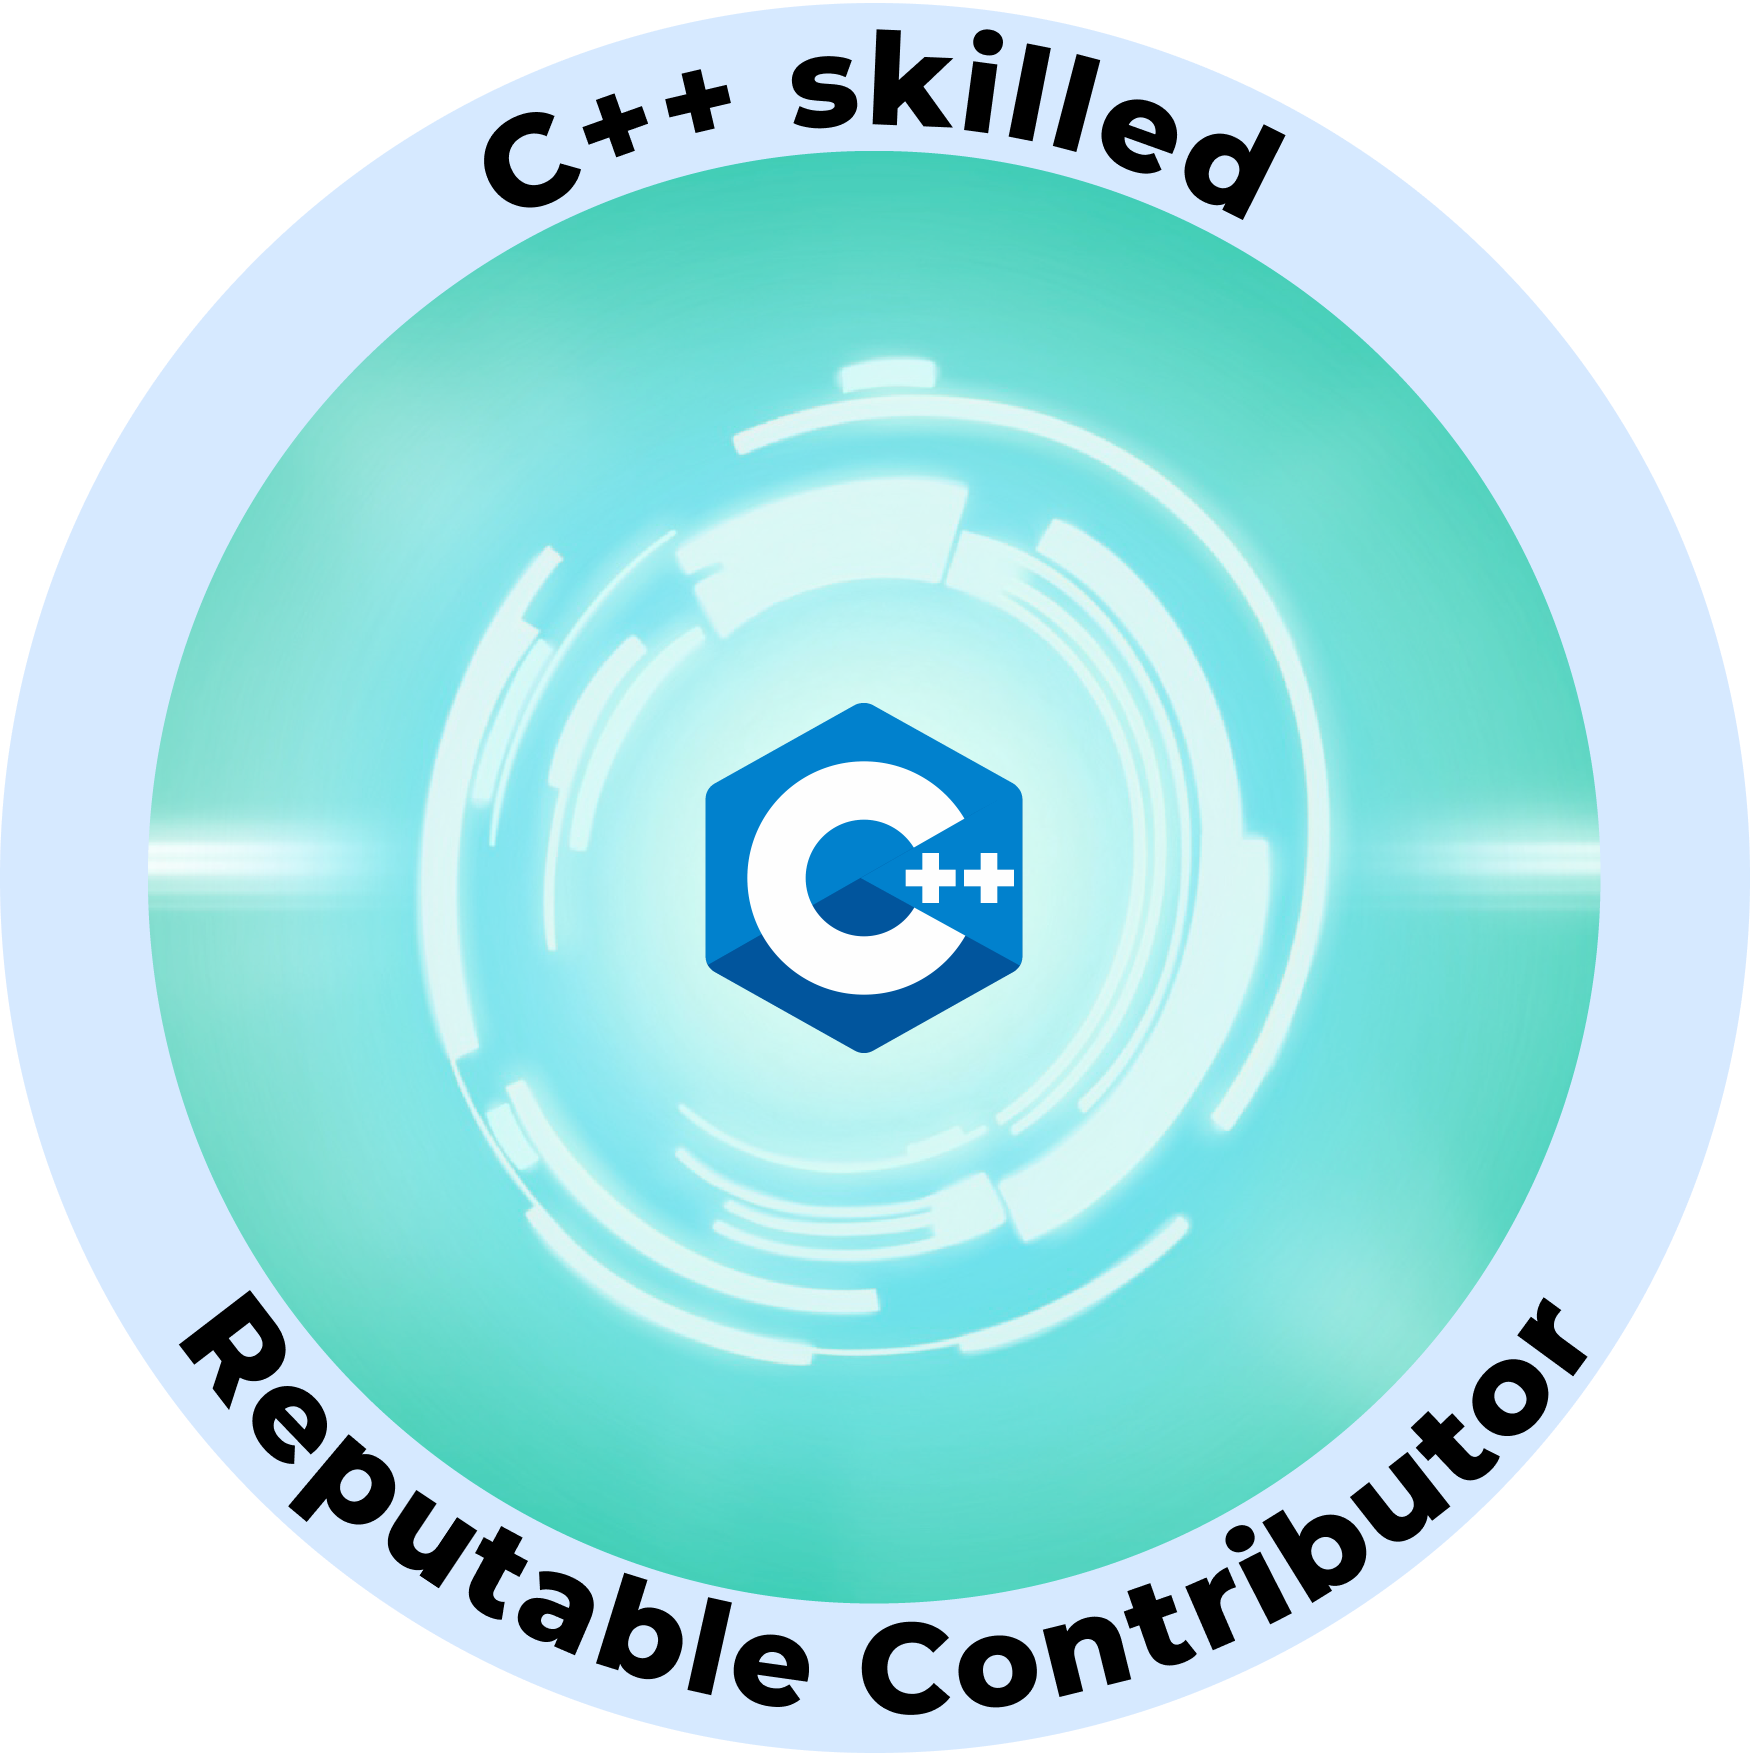 Web3 Badge | Reputable C++ Skilled Contributor logo